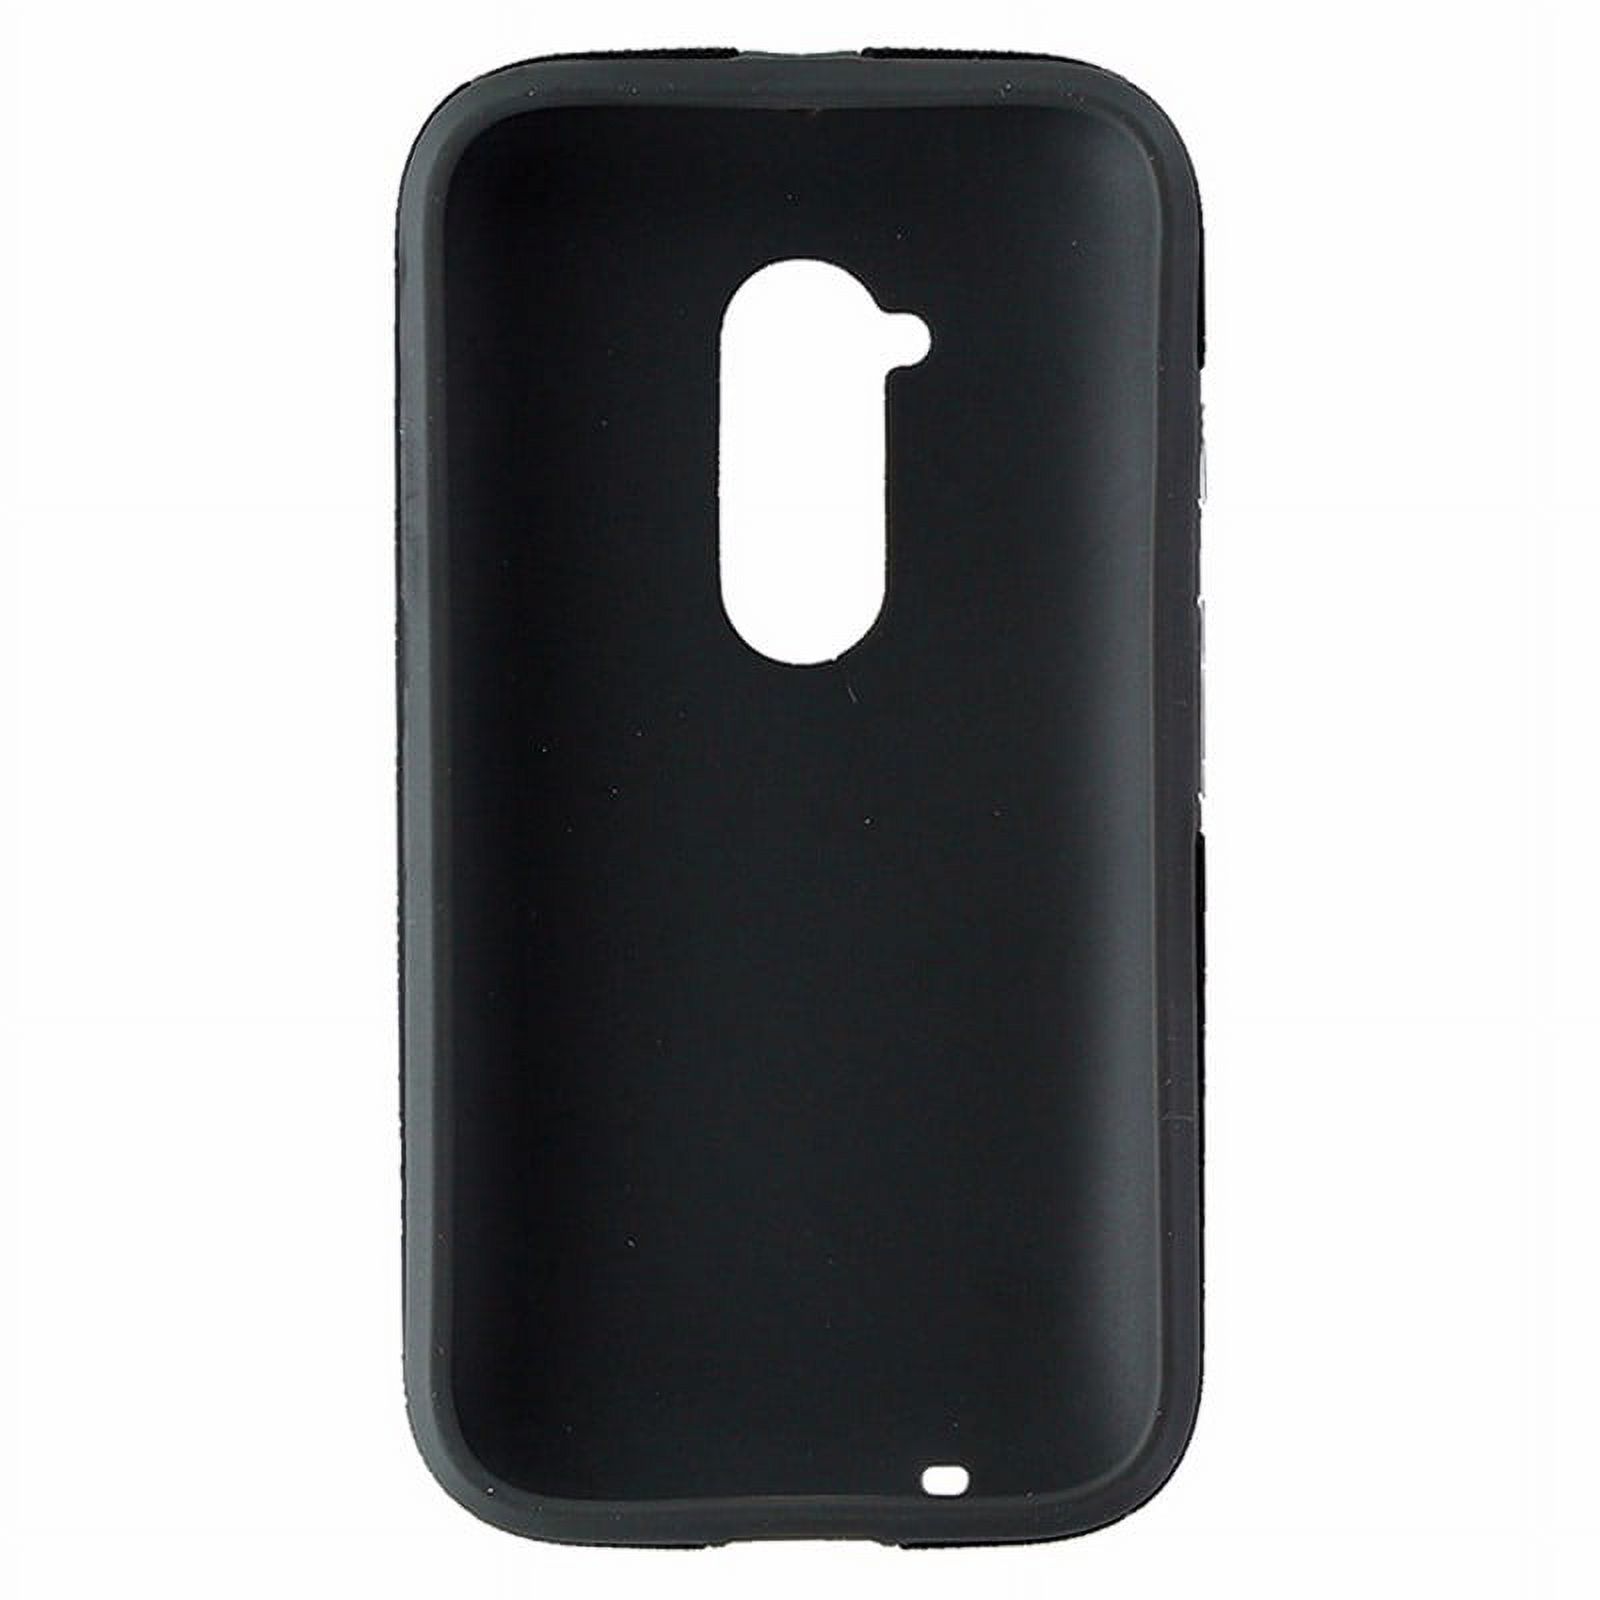 Case-Mate Tough Series Case for Motorola Moto E (2nd Generation) - Black / Gray - image 2 of 2